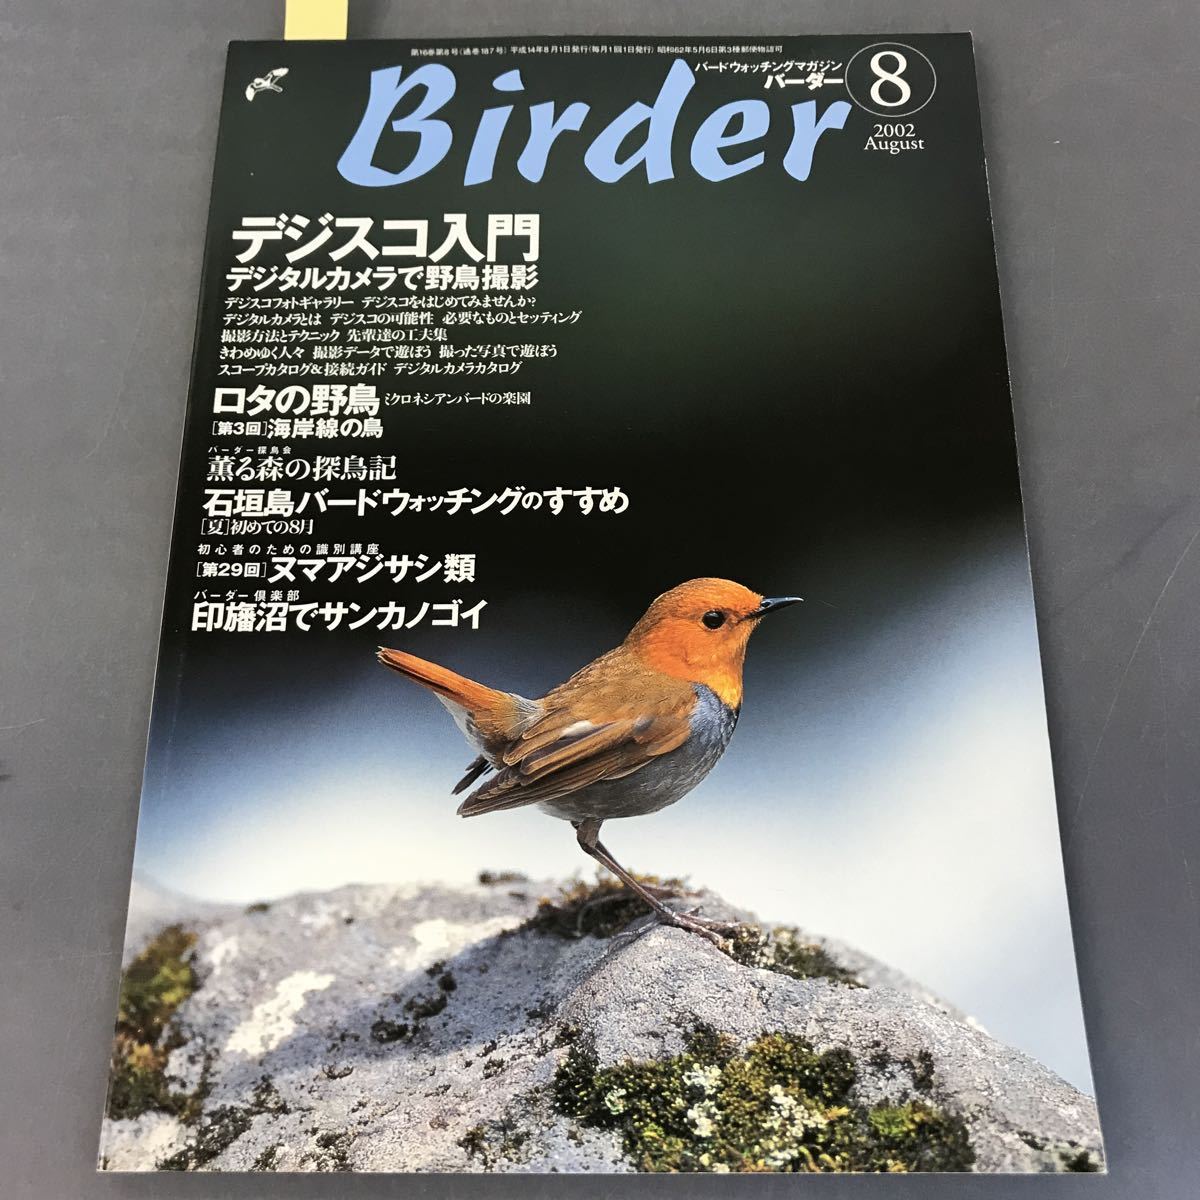 A12-126 Birder August 2002 8 特集デジスコ入門ーデジタルカメラで野鳥撮影 文一総合出版